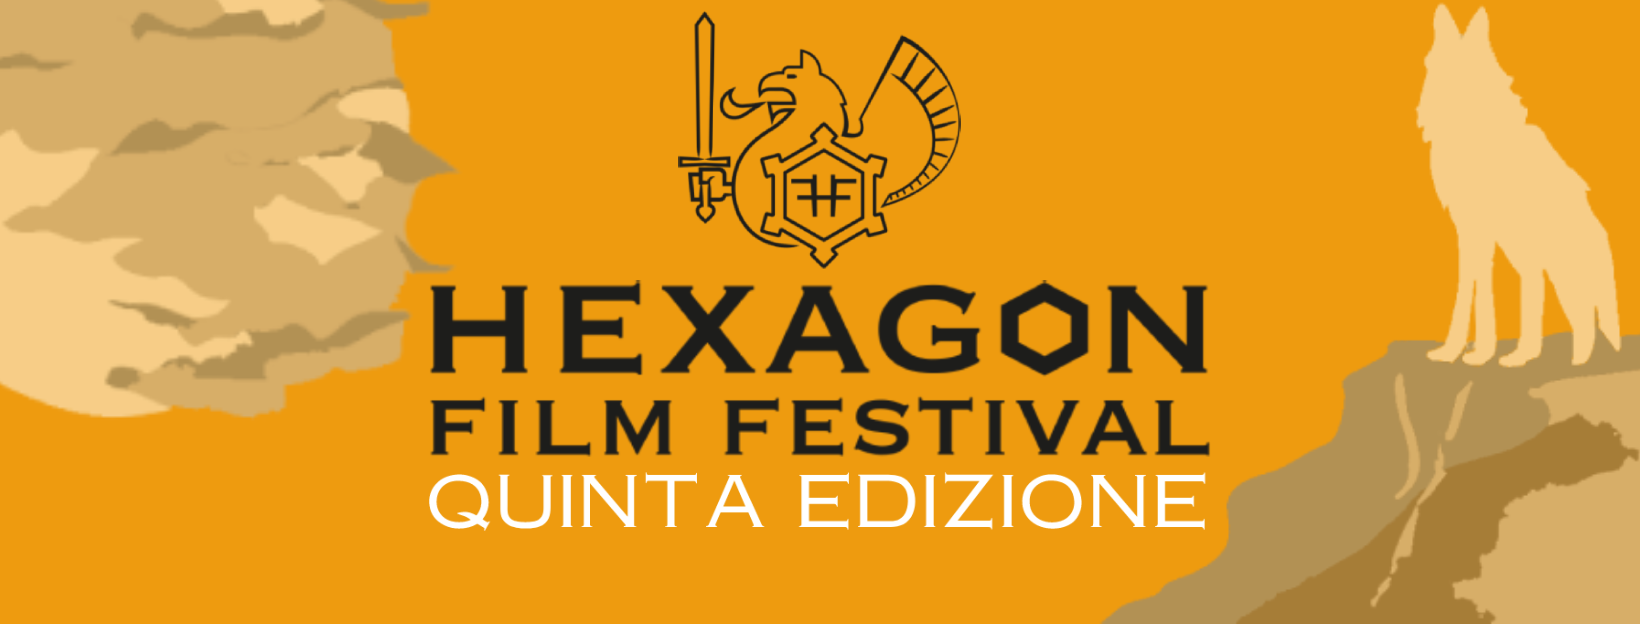 hexagon film festival